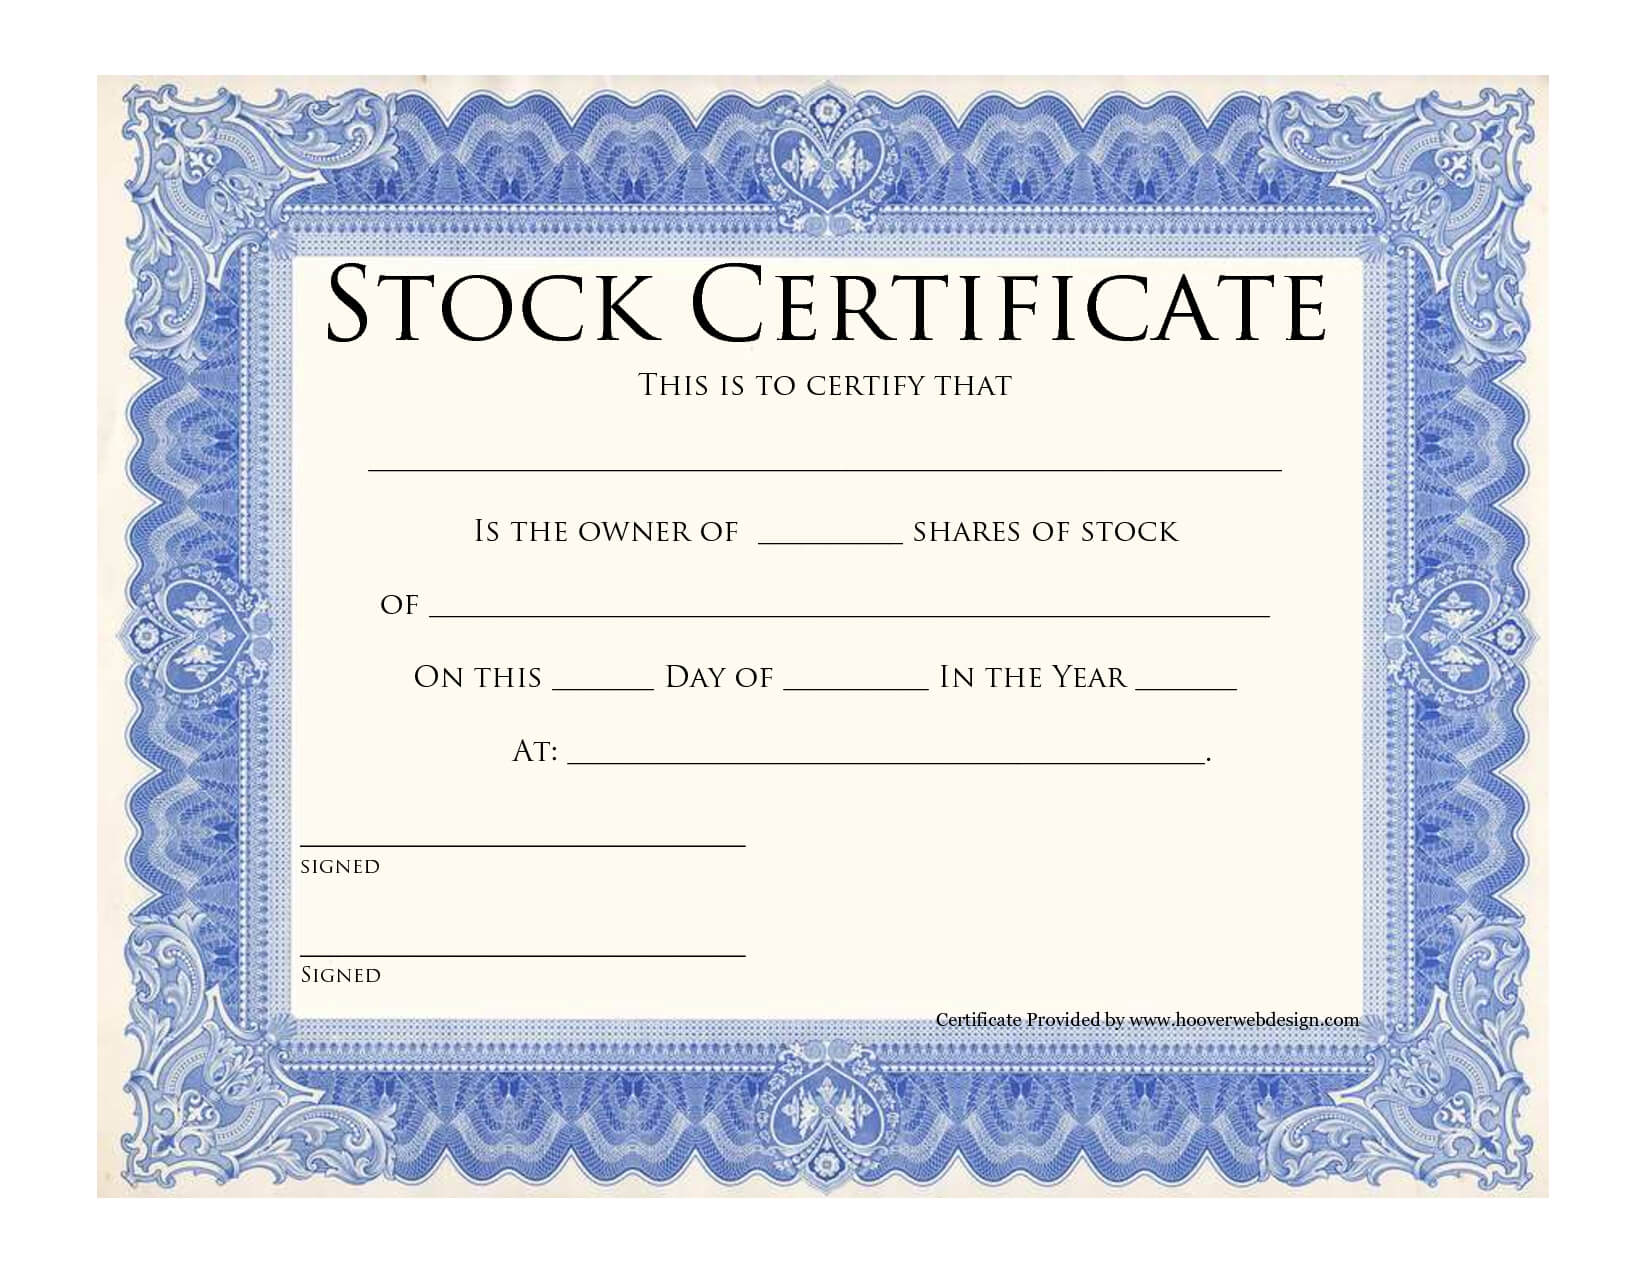 Blank Stock Certificate Template | Printable Stock Regarding Share Certificate Template Australia